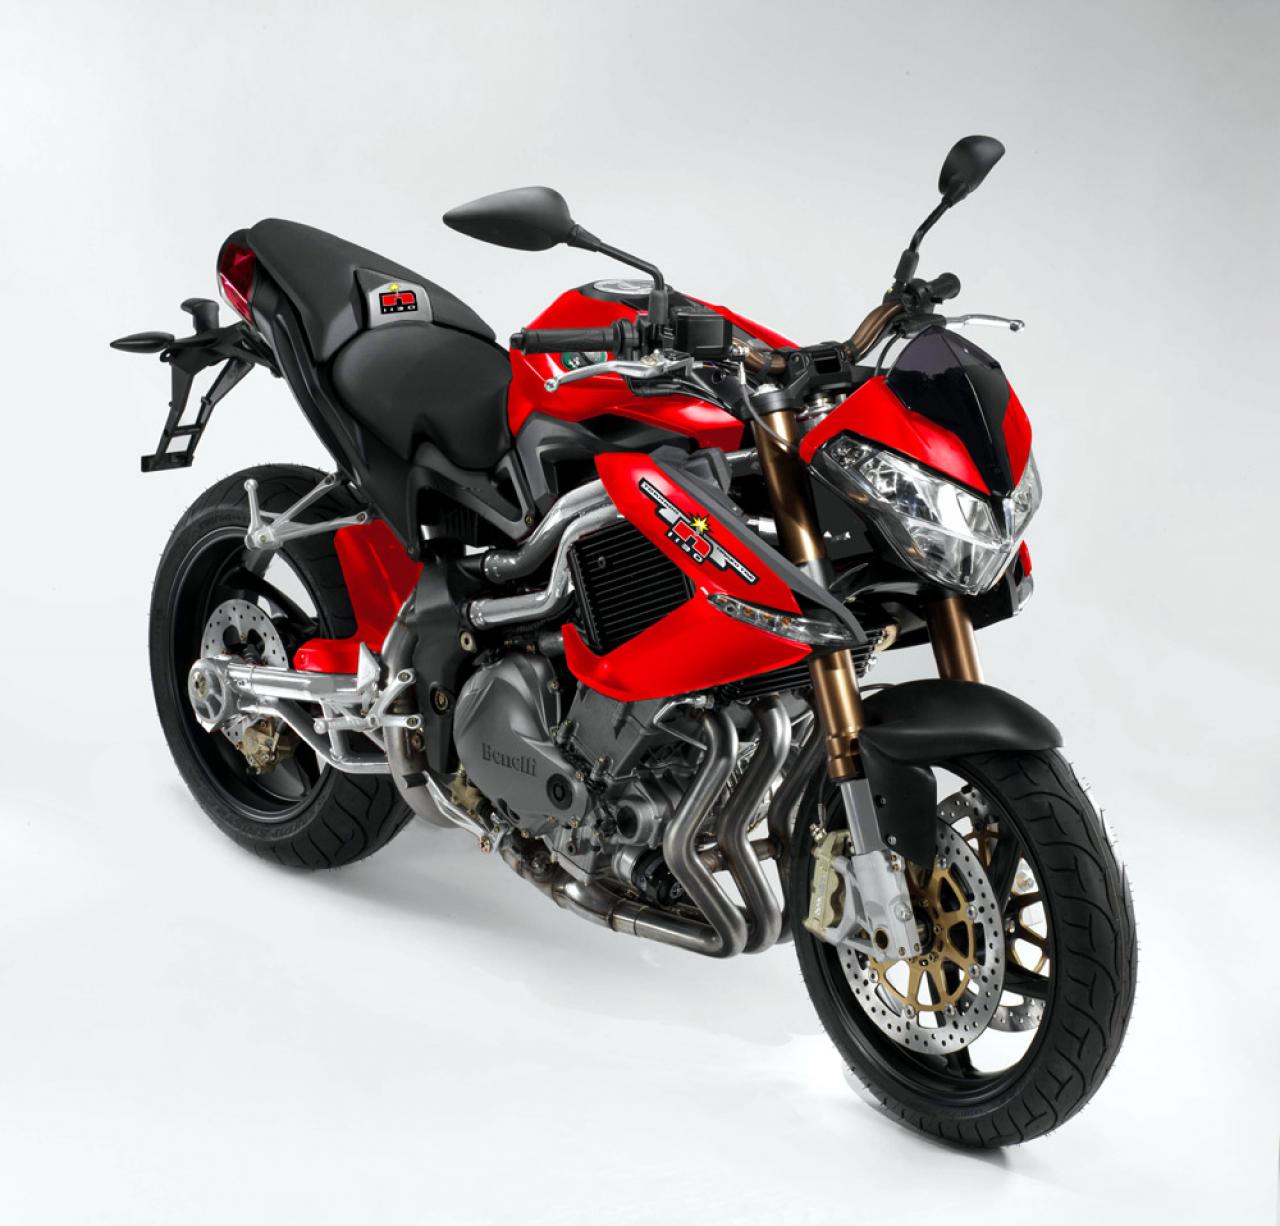 Ducati Naked bike - Moto.ZombDrive.COM